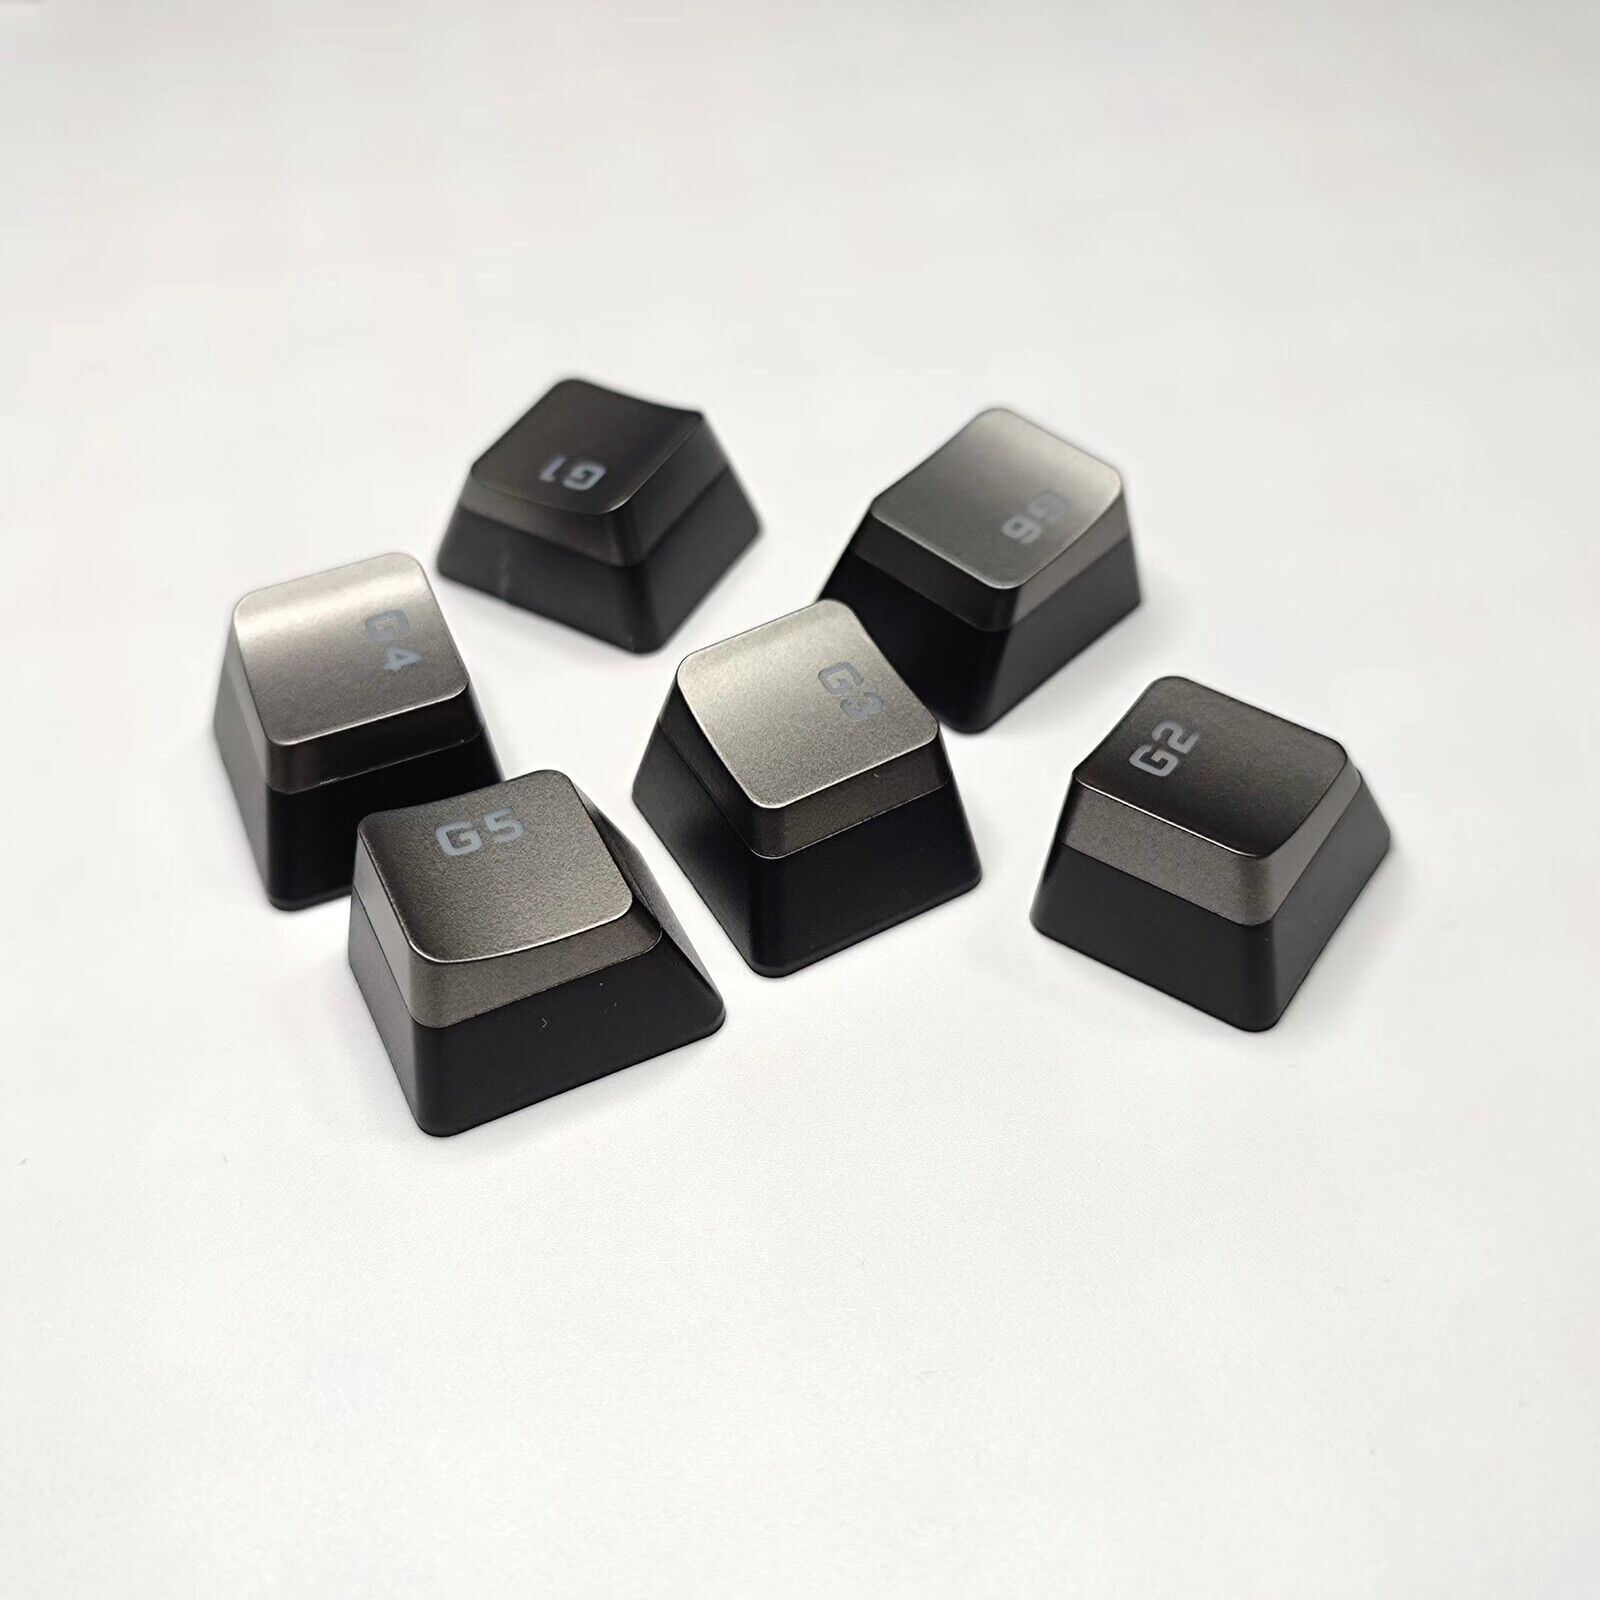 Keyboard Keycaps G1-G6 Key Caps For Corsair K100 Mechanical Keyboard Accessories